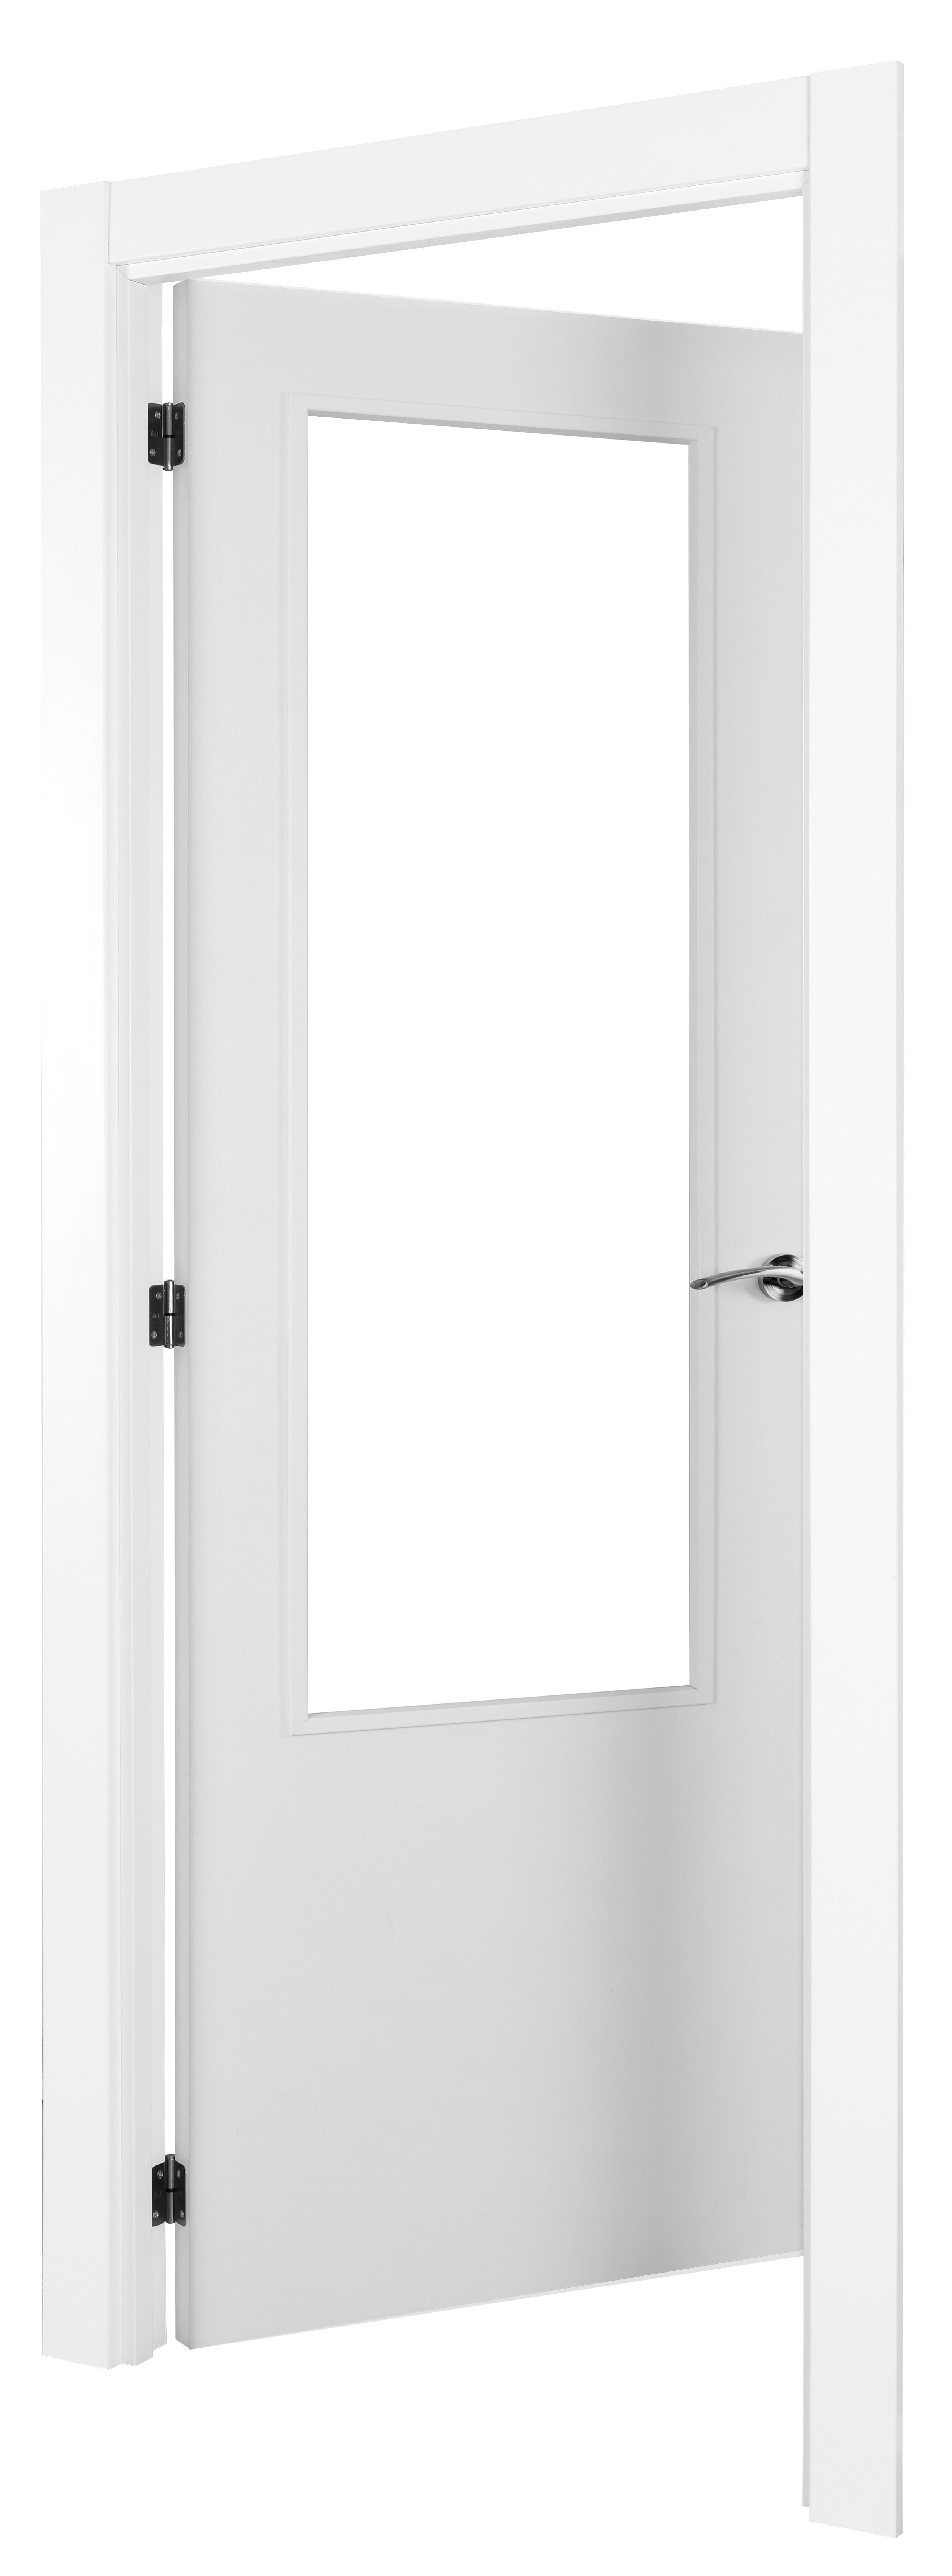 Puerta bari blanco apertura izquierda con cristal 82.5cm